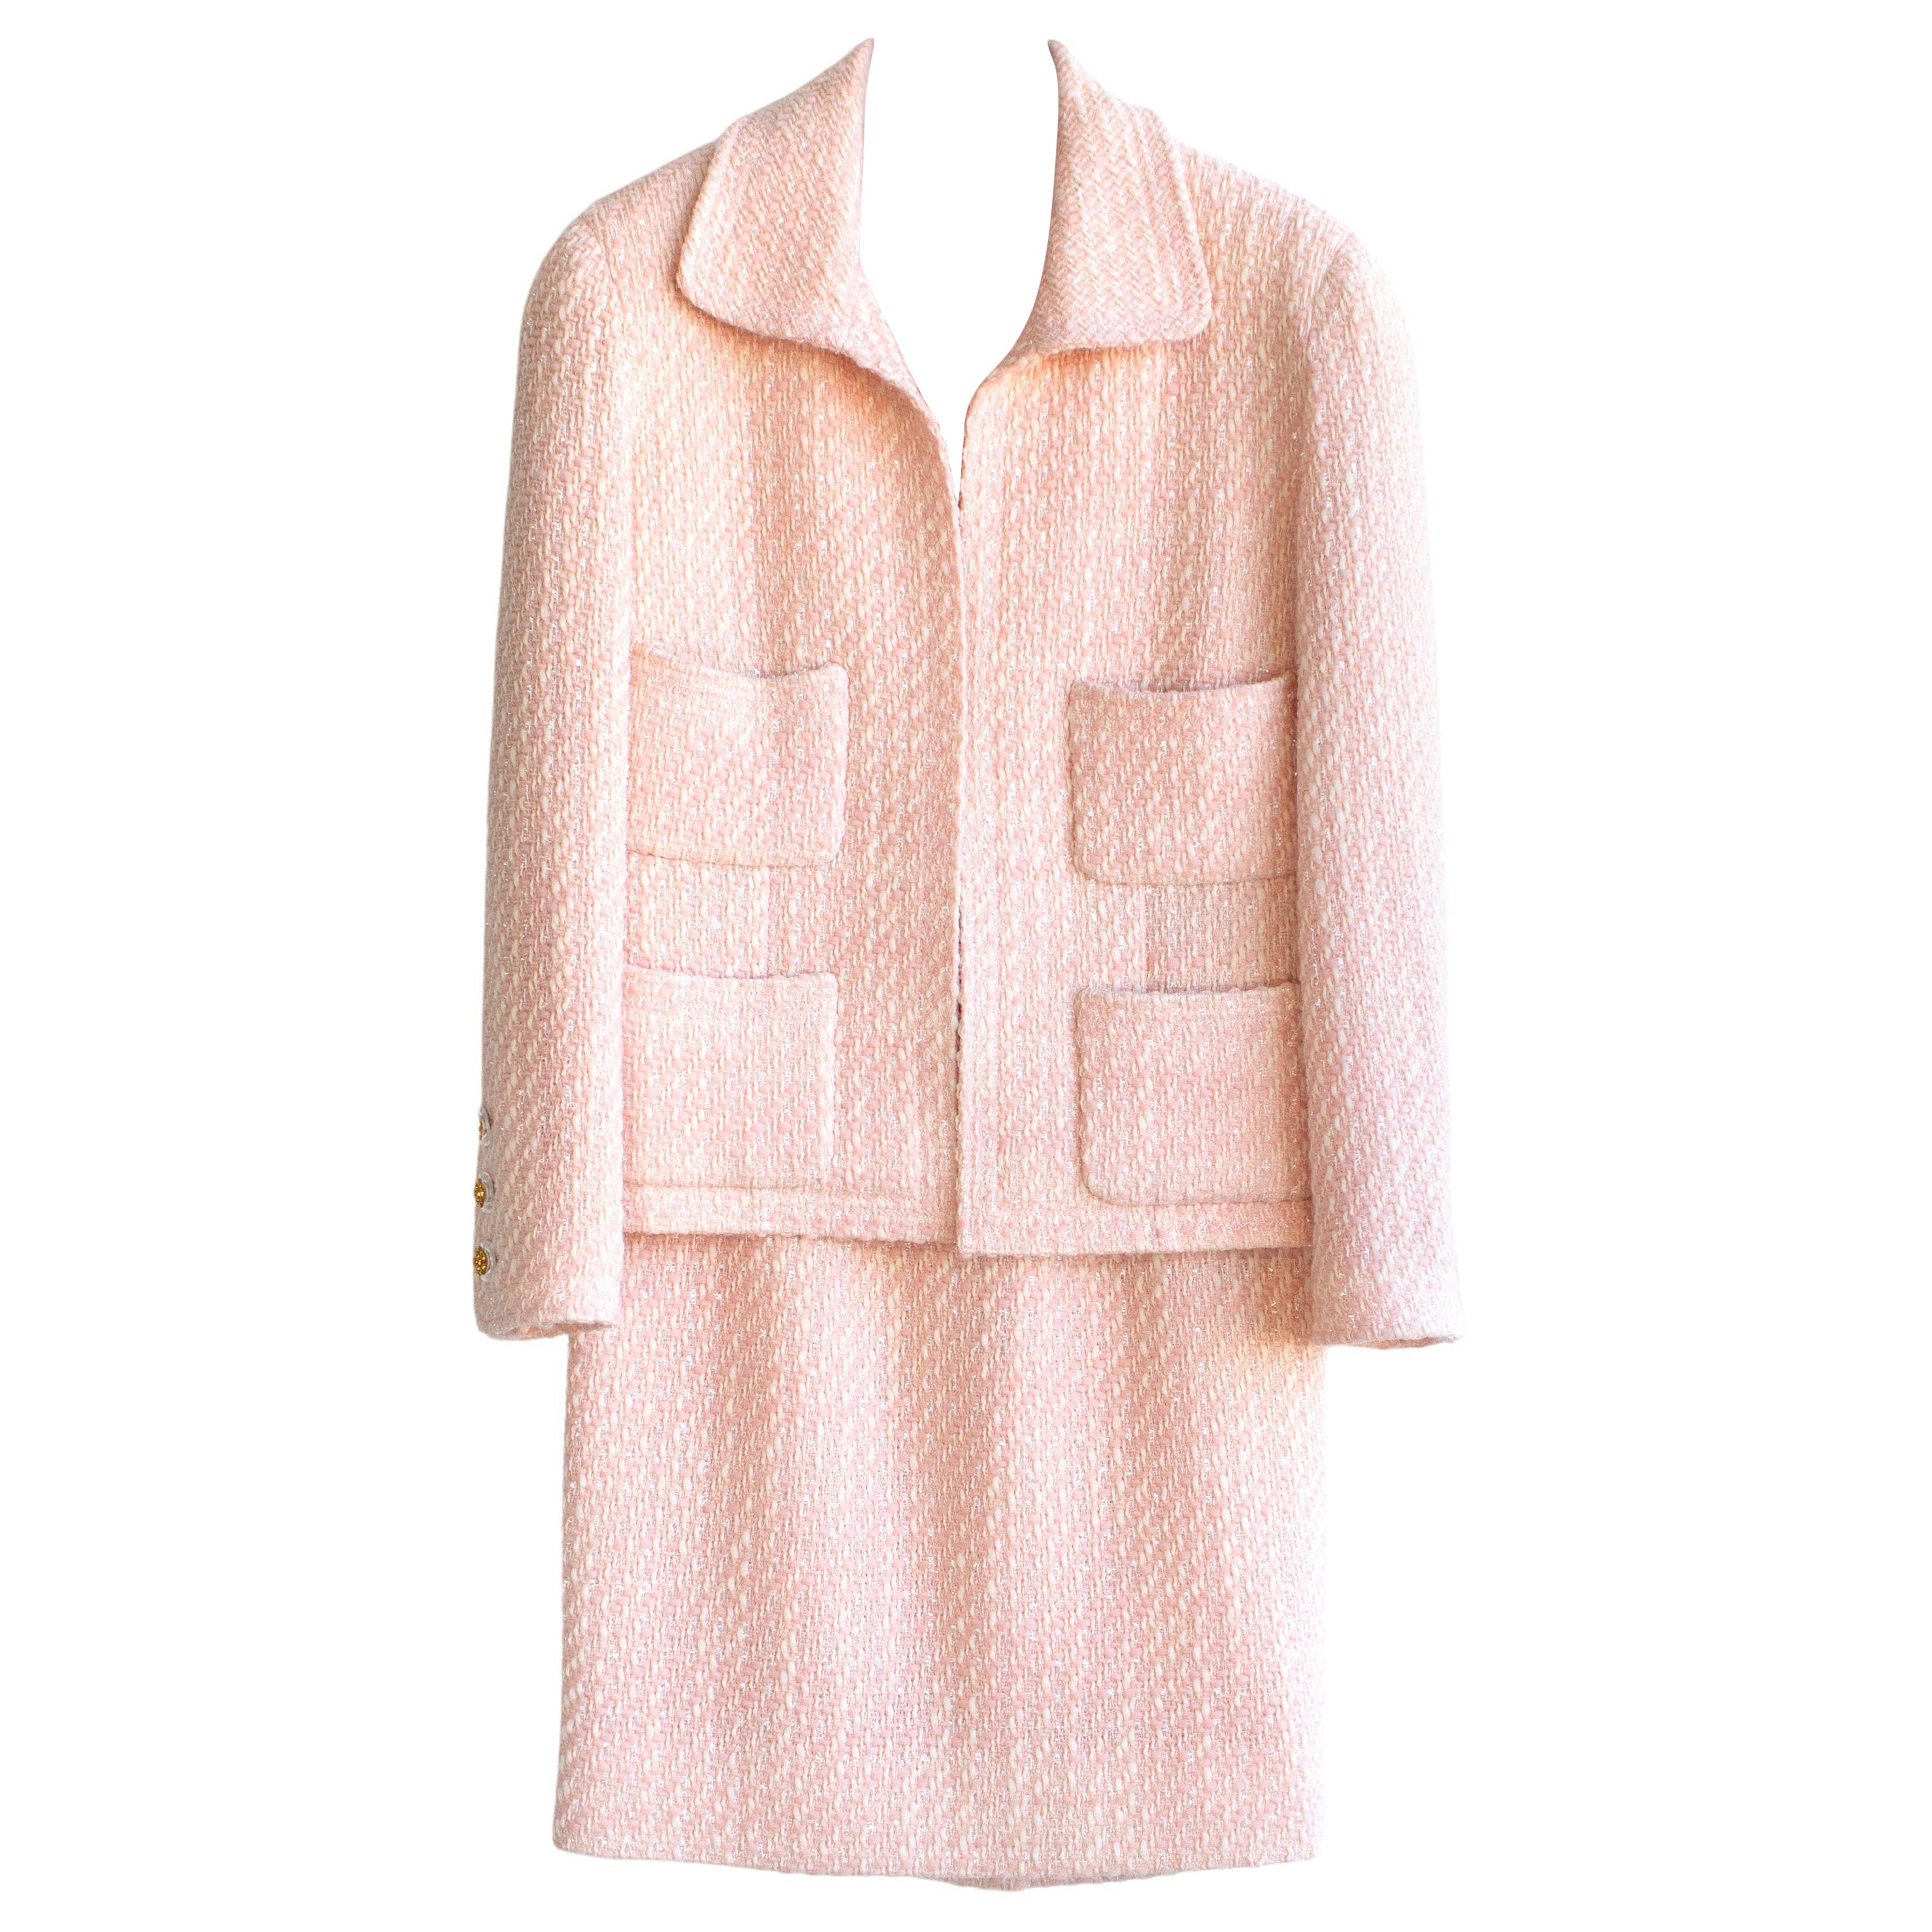 Rare Chanel Vintage S/S 1992 Pink Tweed Gold Camellia Jacket Skirt Suit For Sale